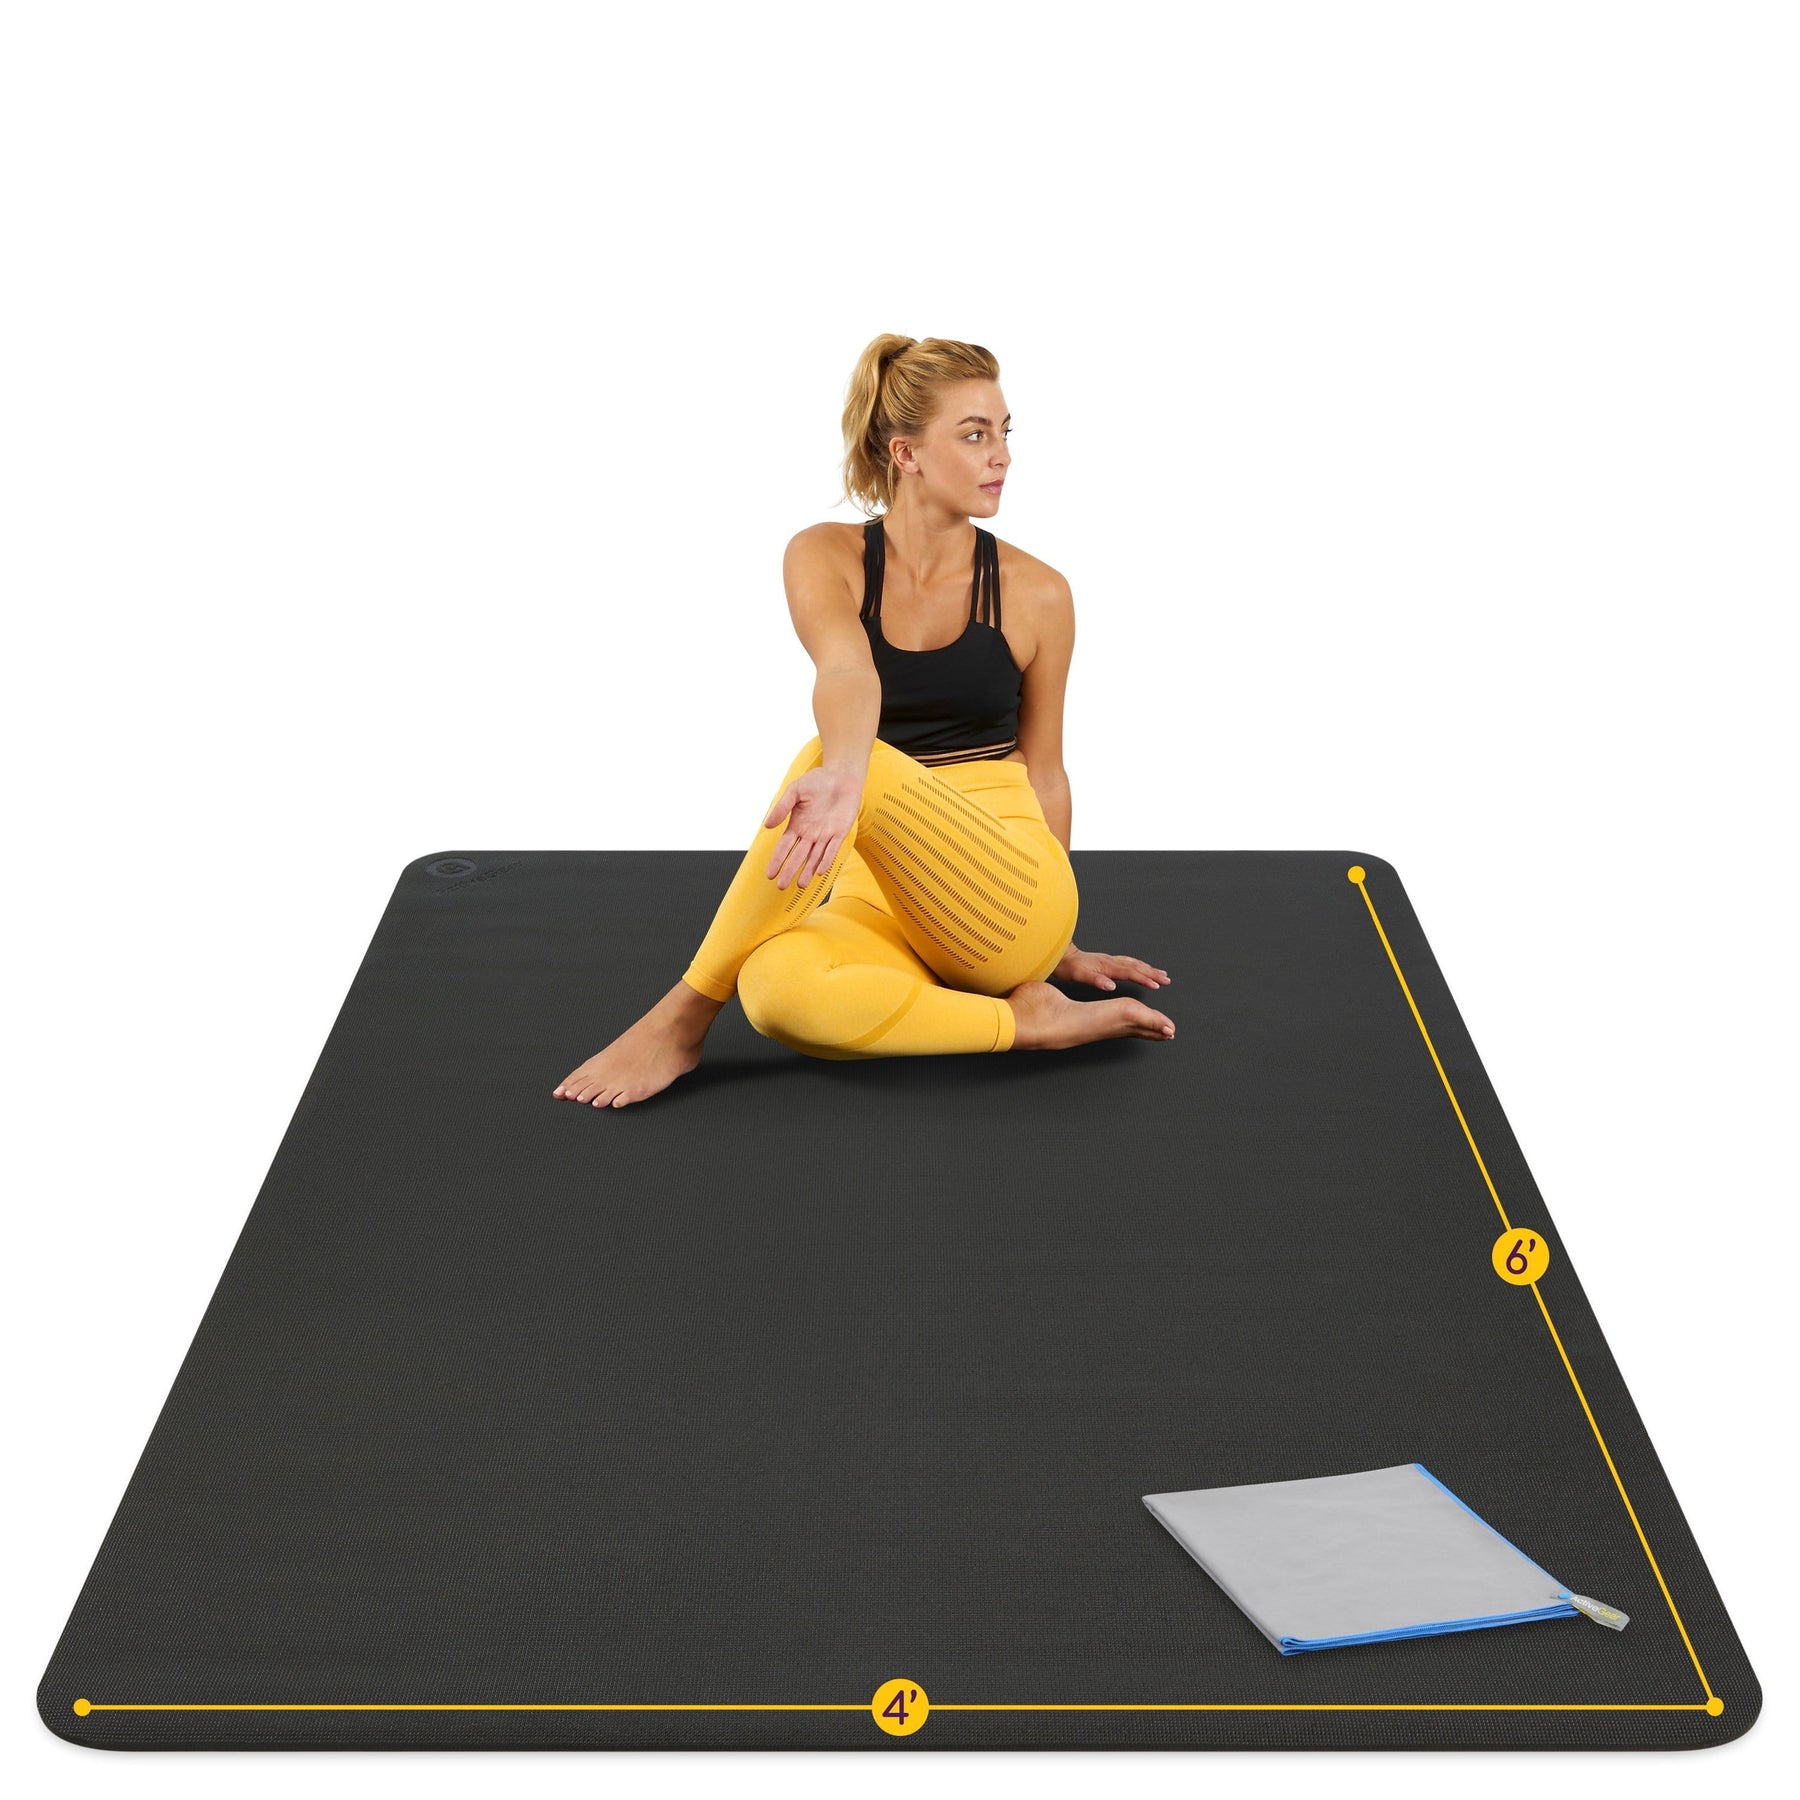 Large Yoga Mats for Acroyoga and Home Gym